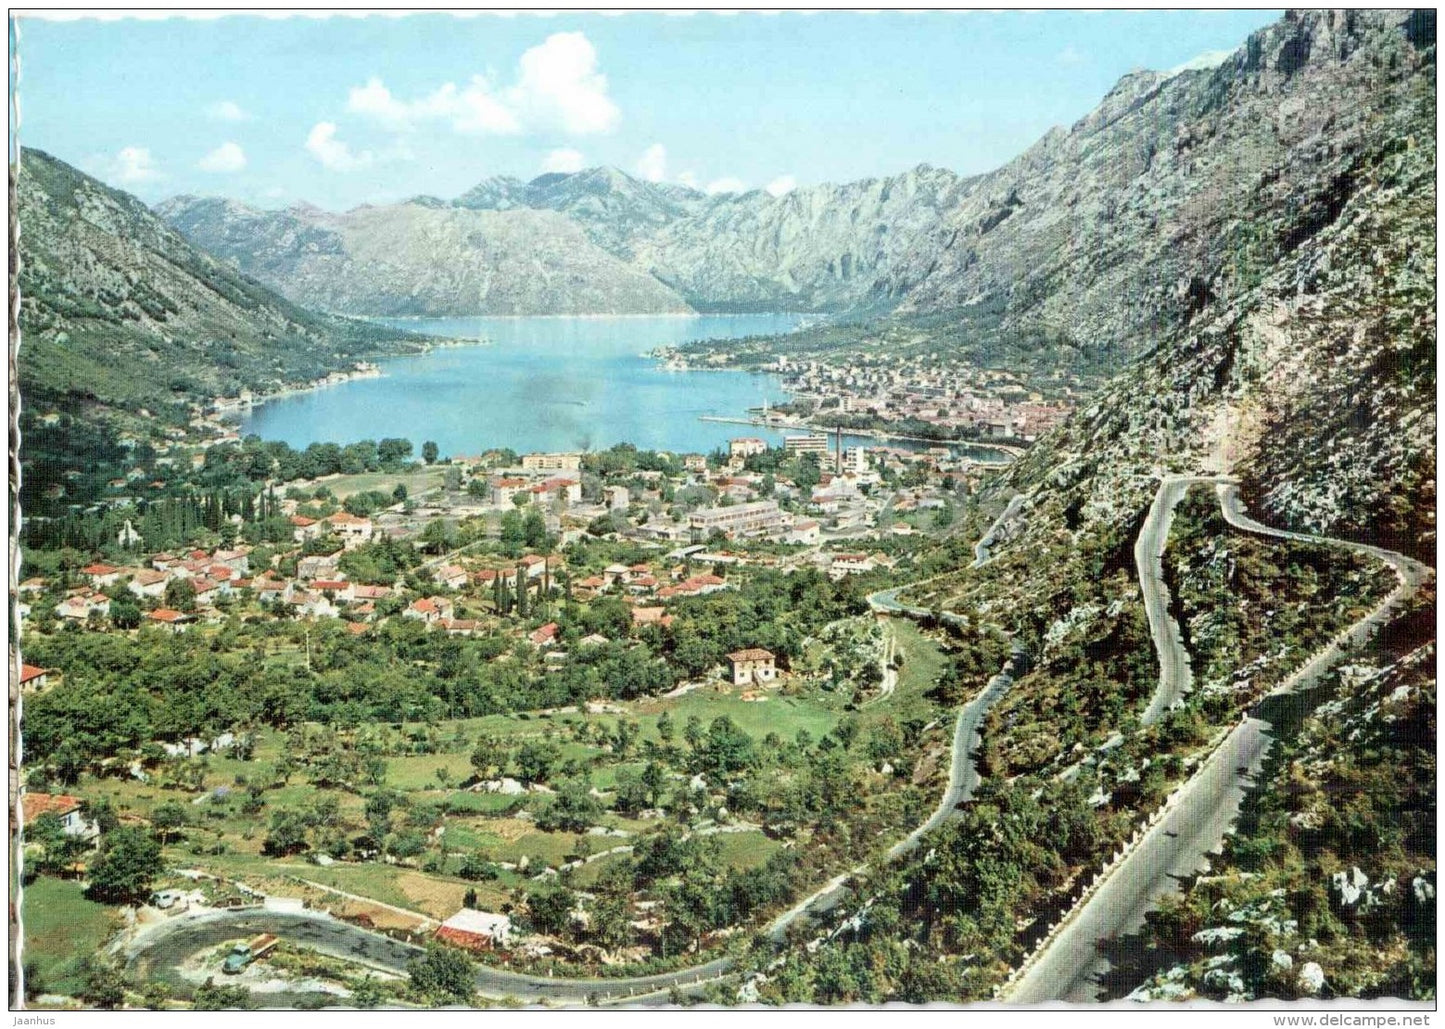 general view - Kotor - 428 - Montenegro - Yugoslavia - unused - JH Postcards